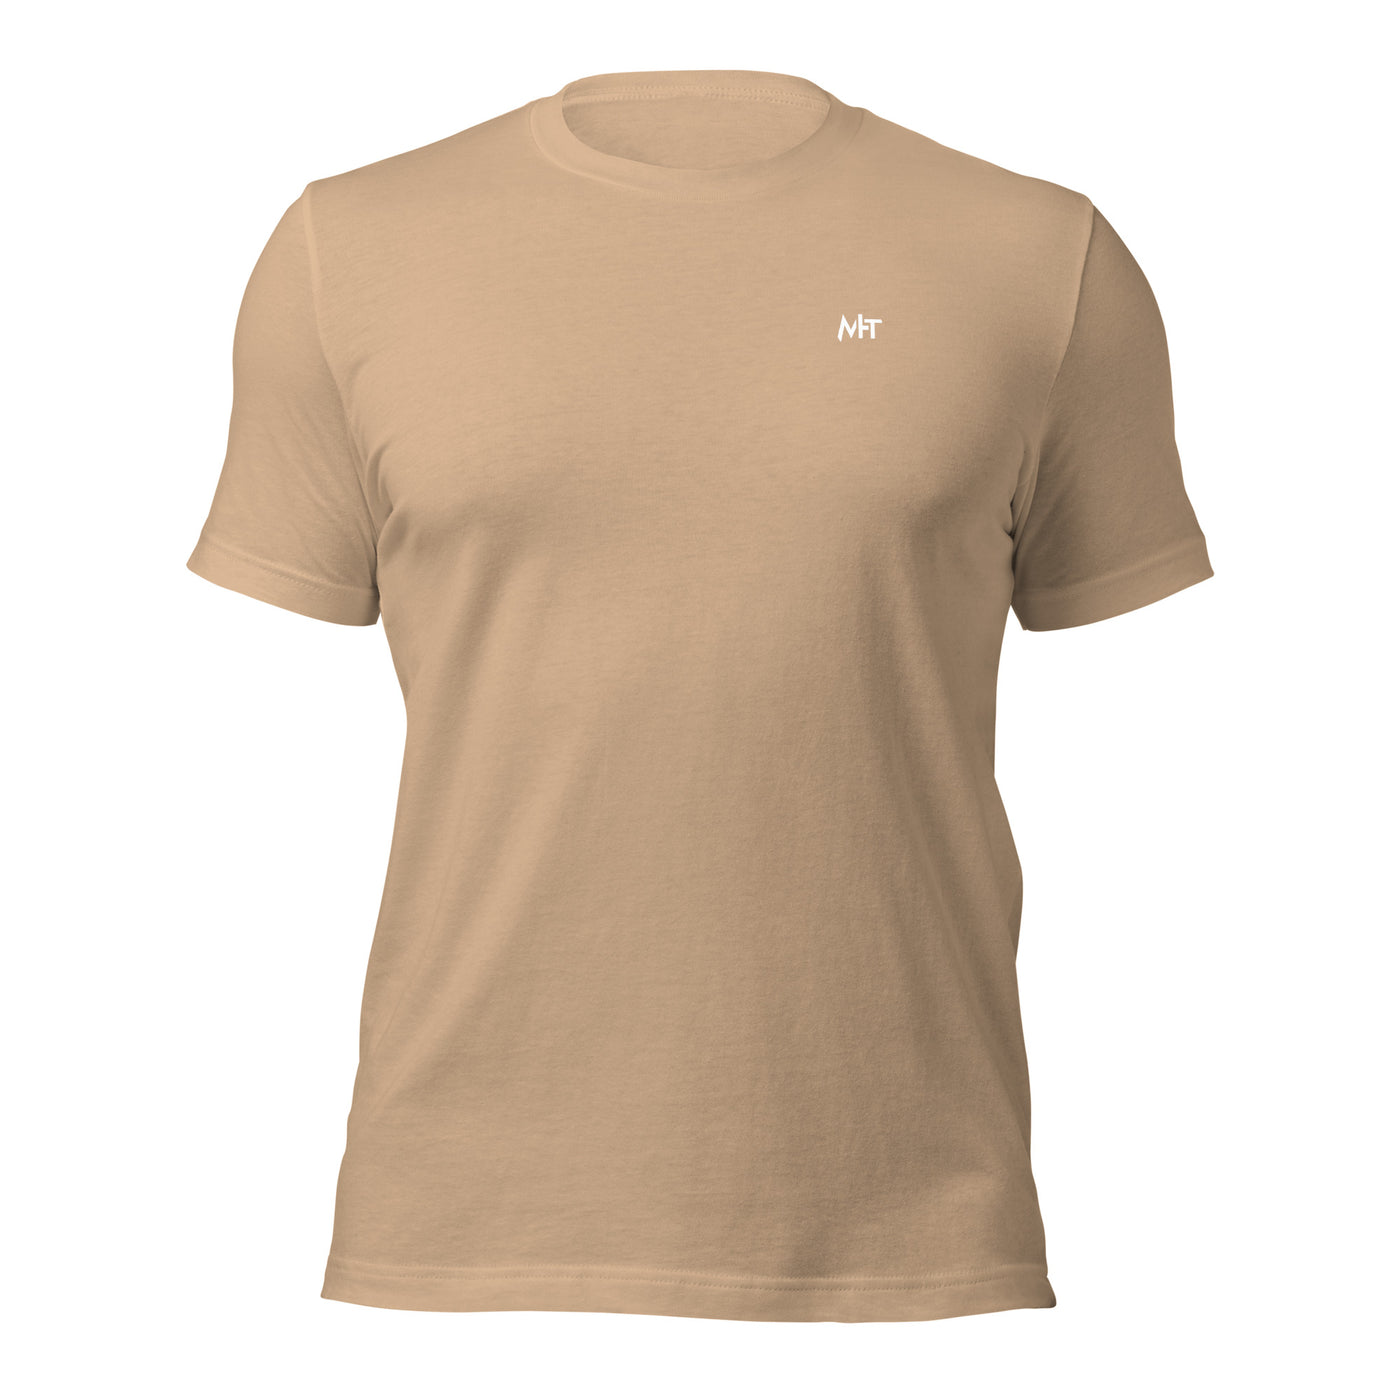 Be a man among men - Unisex t-shirt ( Back Print )